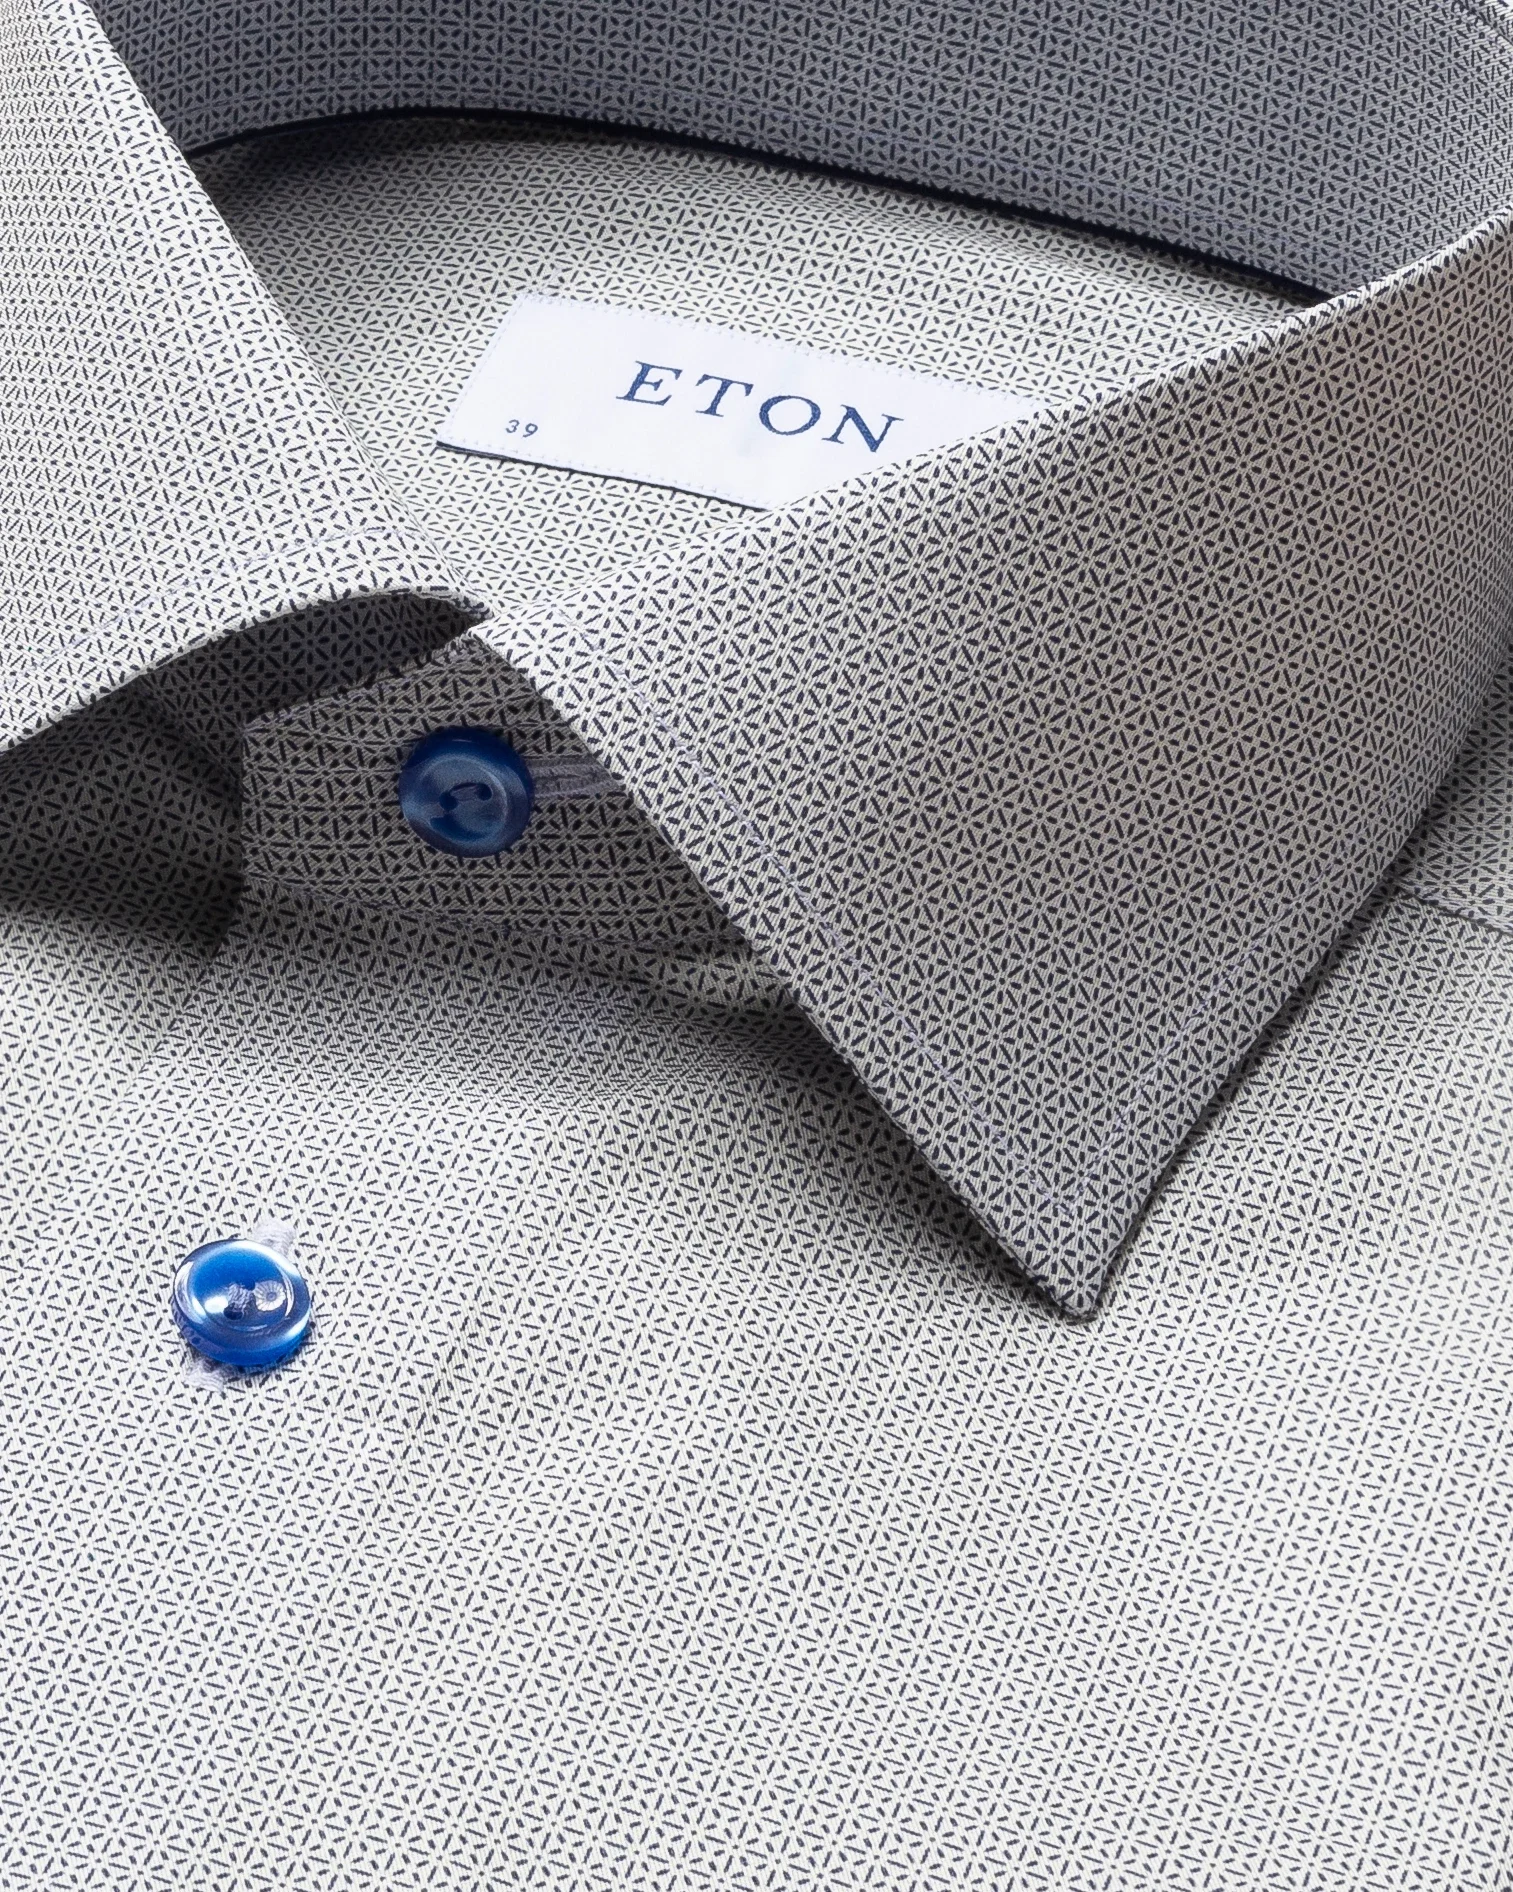 Eton - dark blue micro pattern fine twill shirt